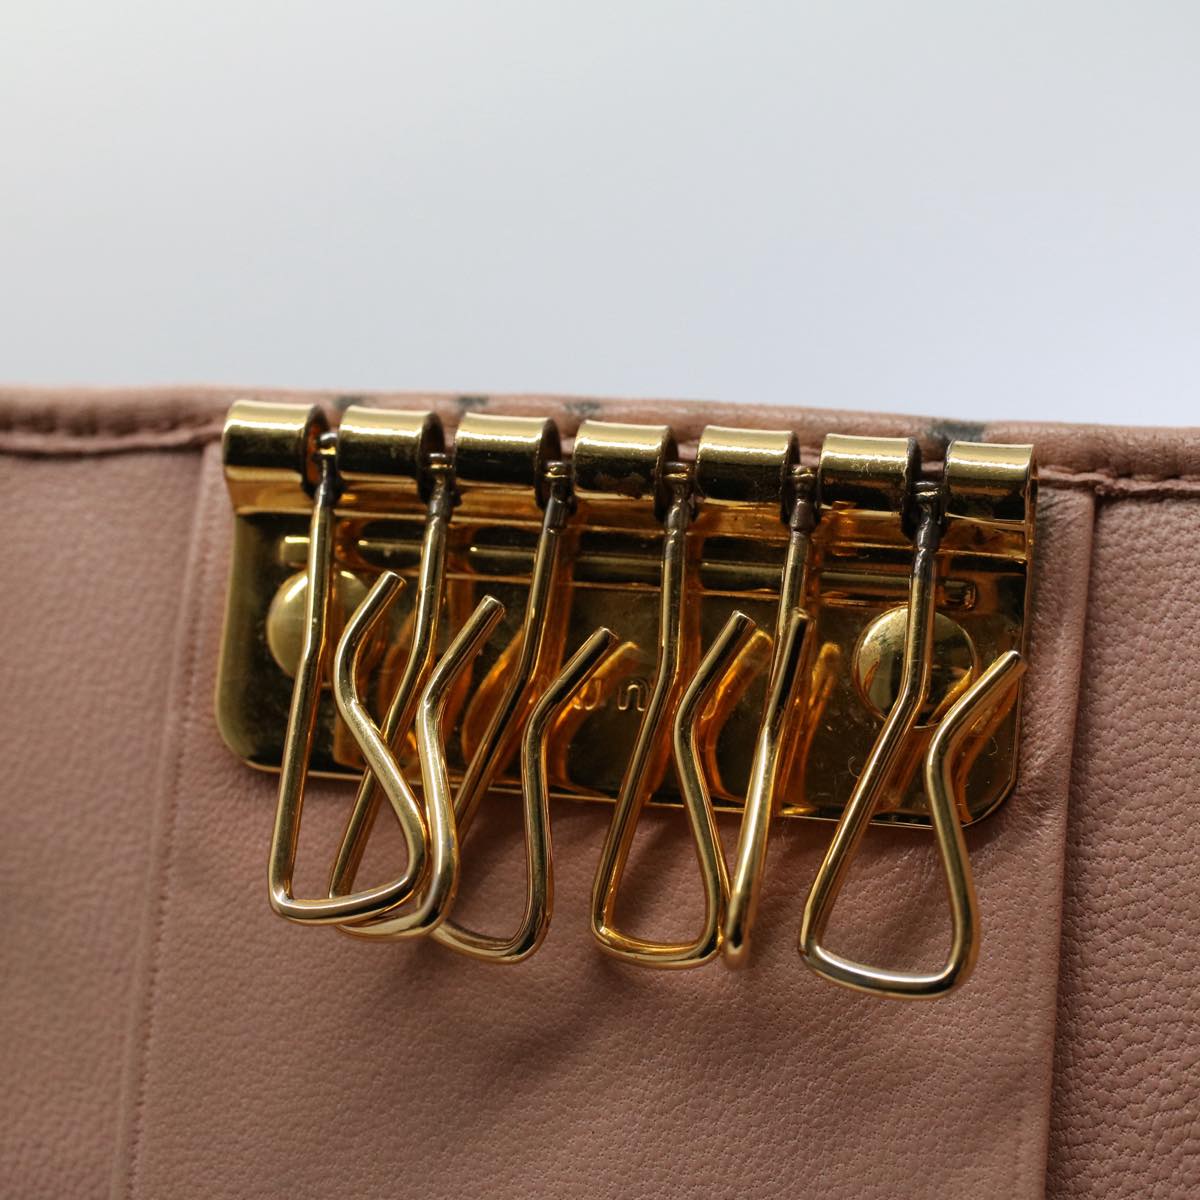 Miu Miu Materasse Key Case Wallet Leather 6Set Pink Black Red Auth bs8521